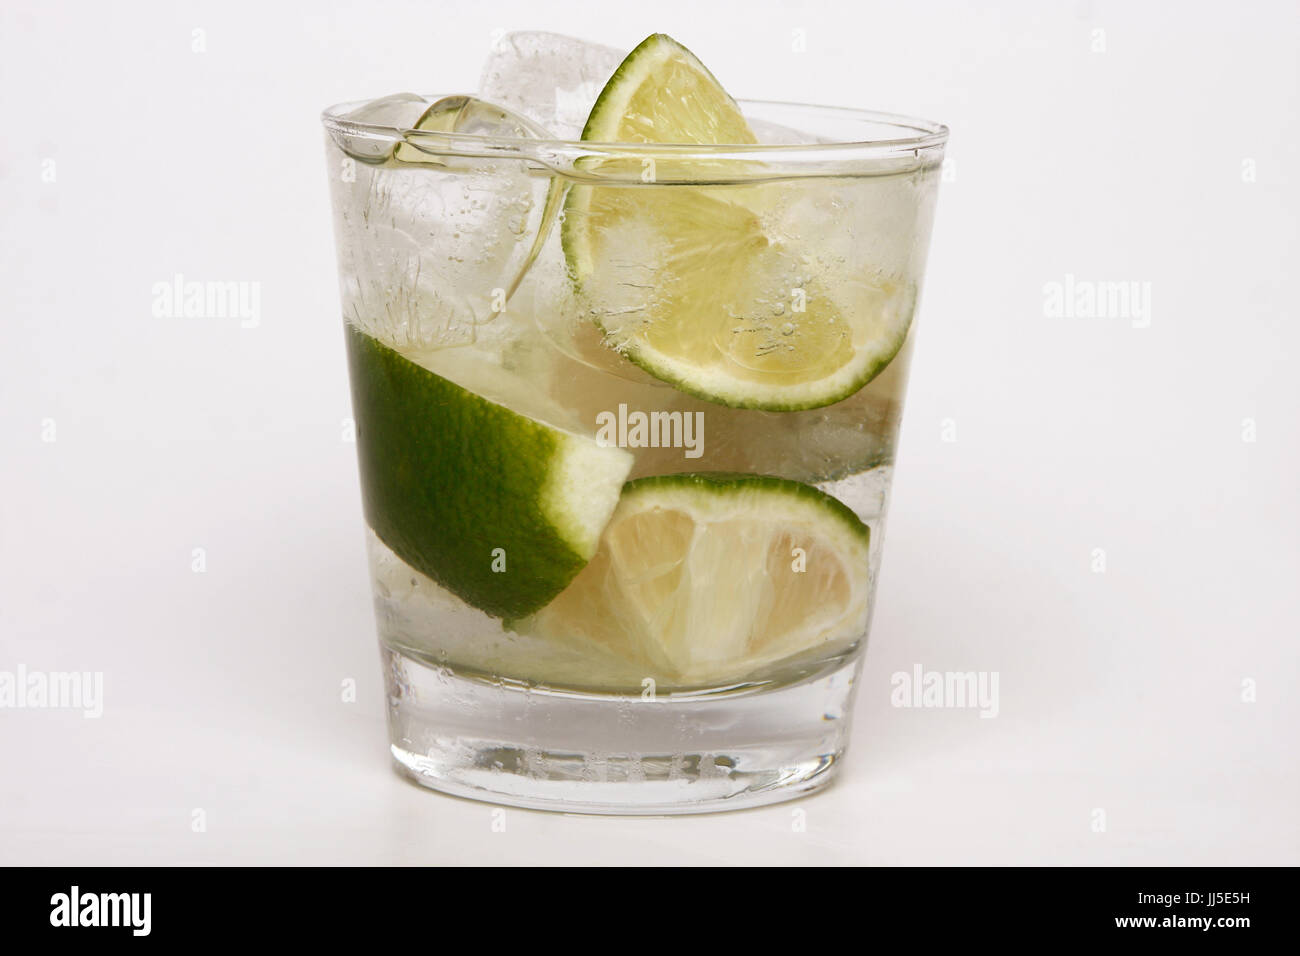 Caipirinha, shot, drink, glass, lime, limon, Brazil Stock Photo